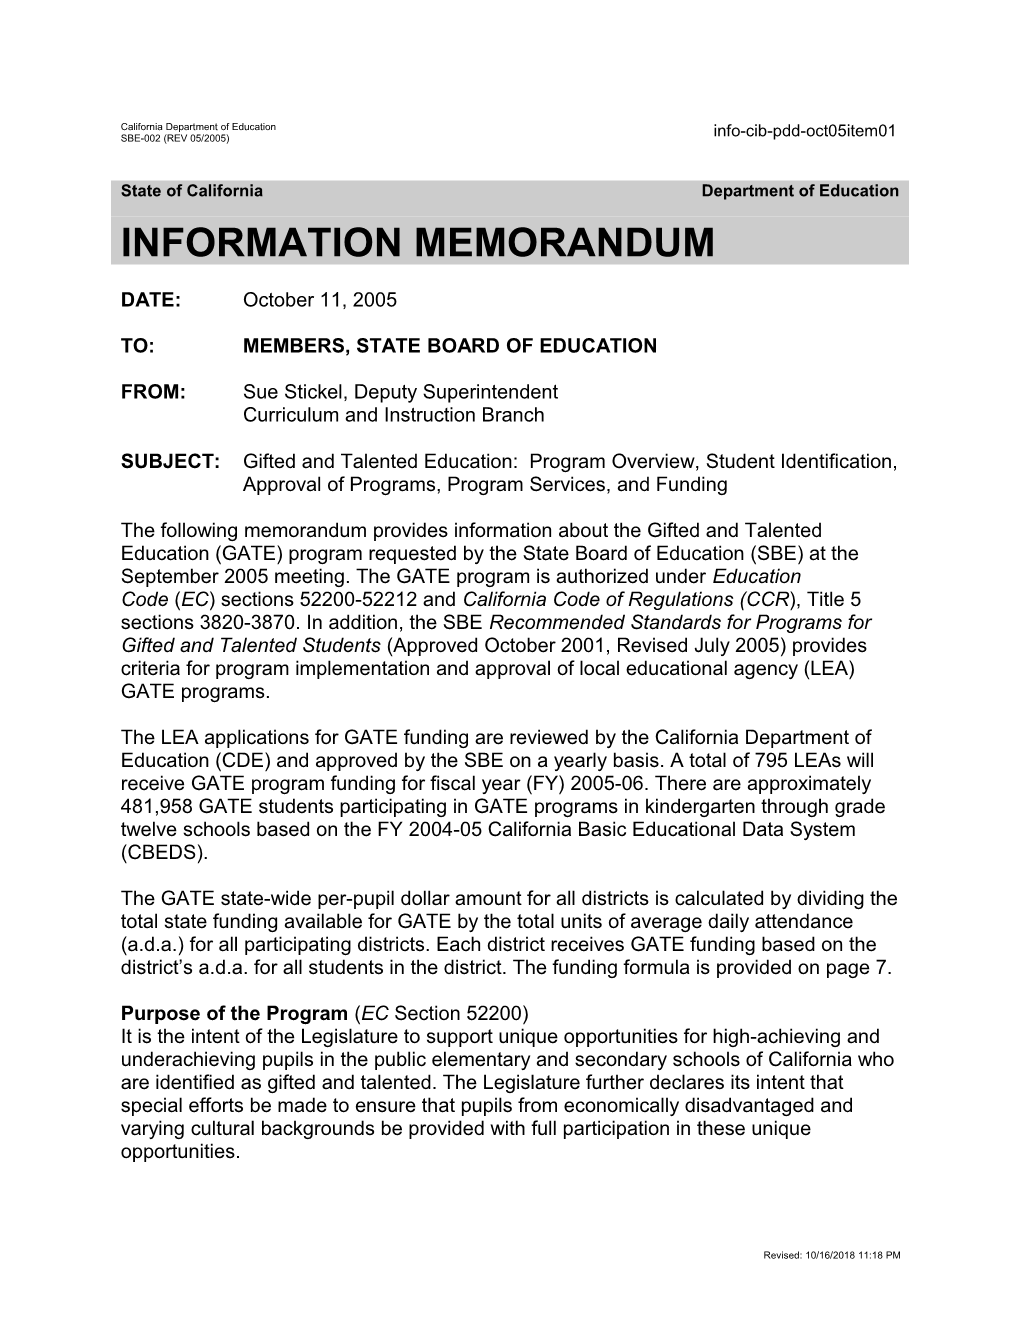 October 2005 PDD Agenda Item 1 - Information Memorandum (CA State Board of Education)